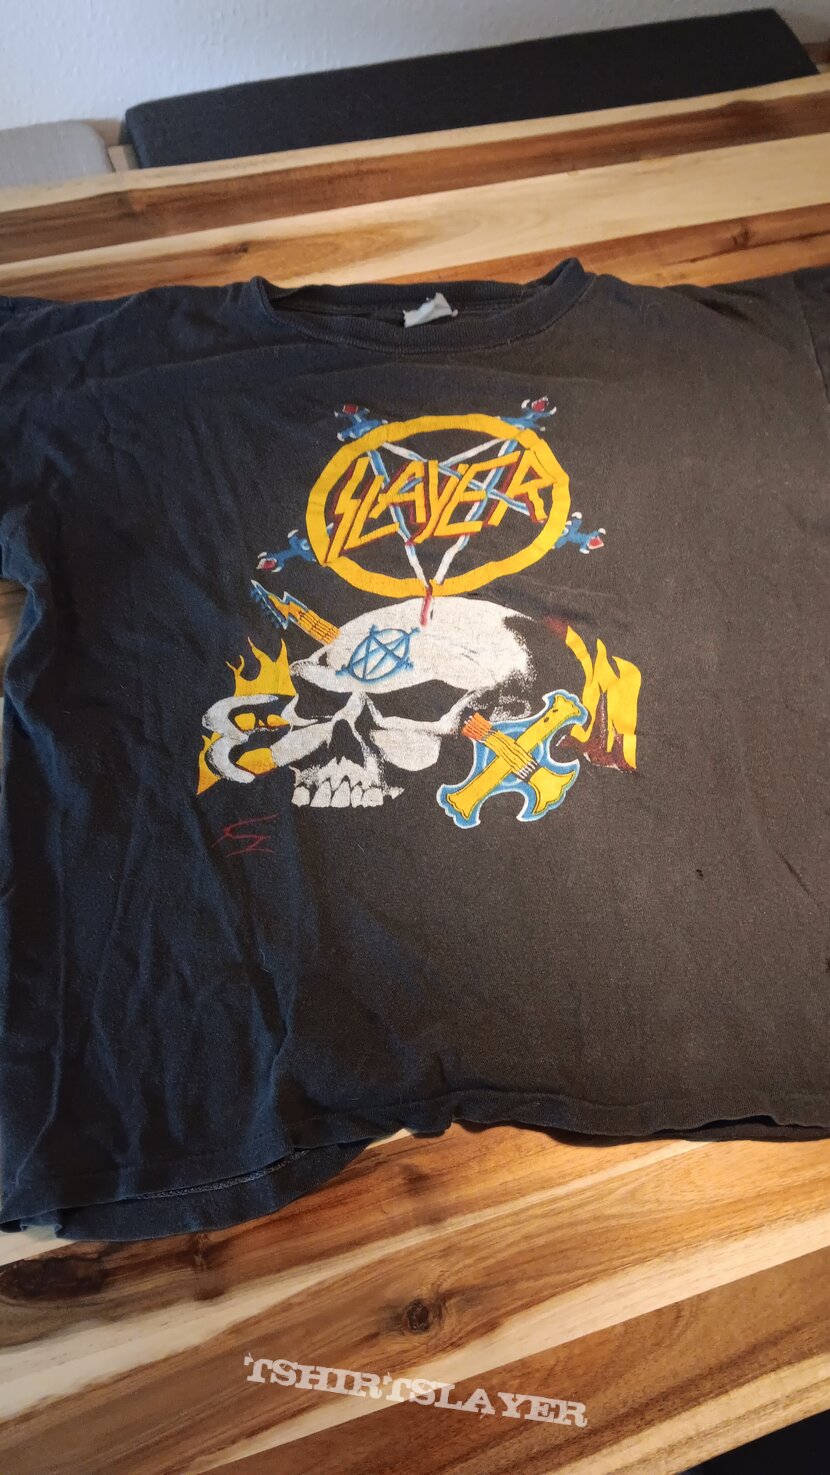 Slayer South of heaven Bootleg Shirt